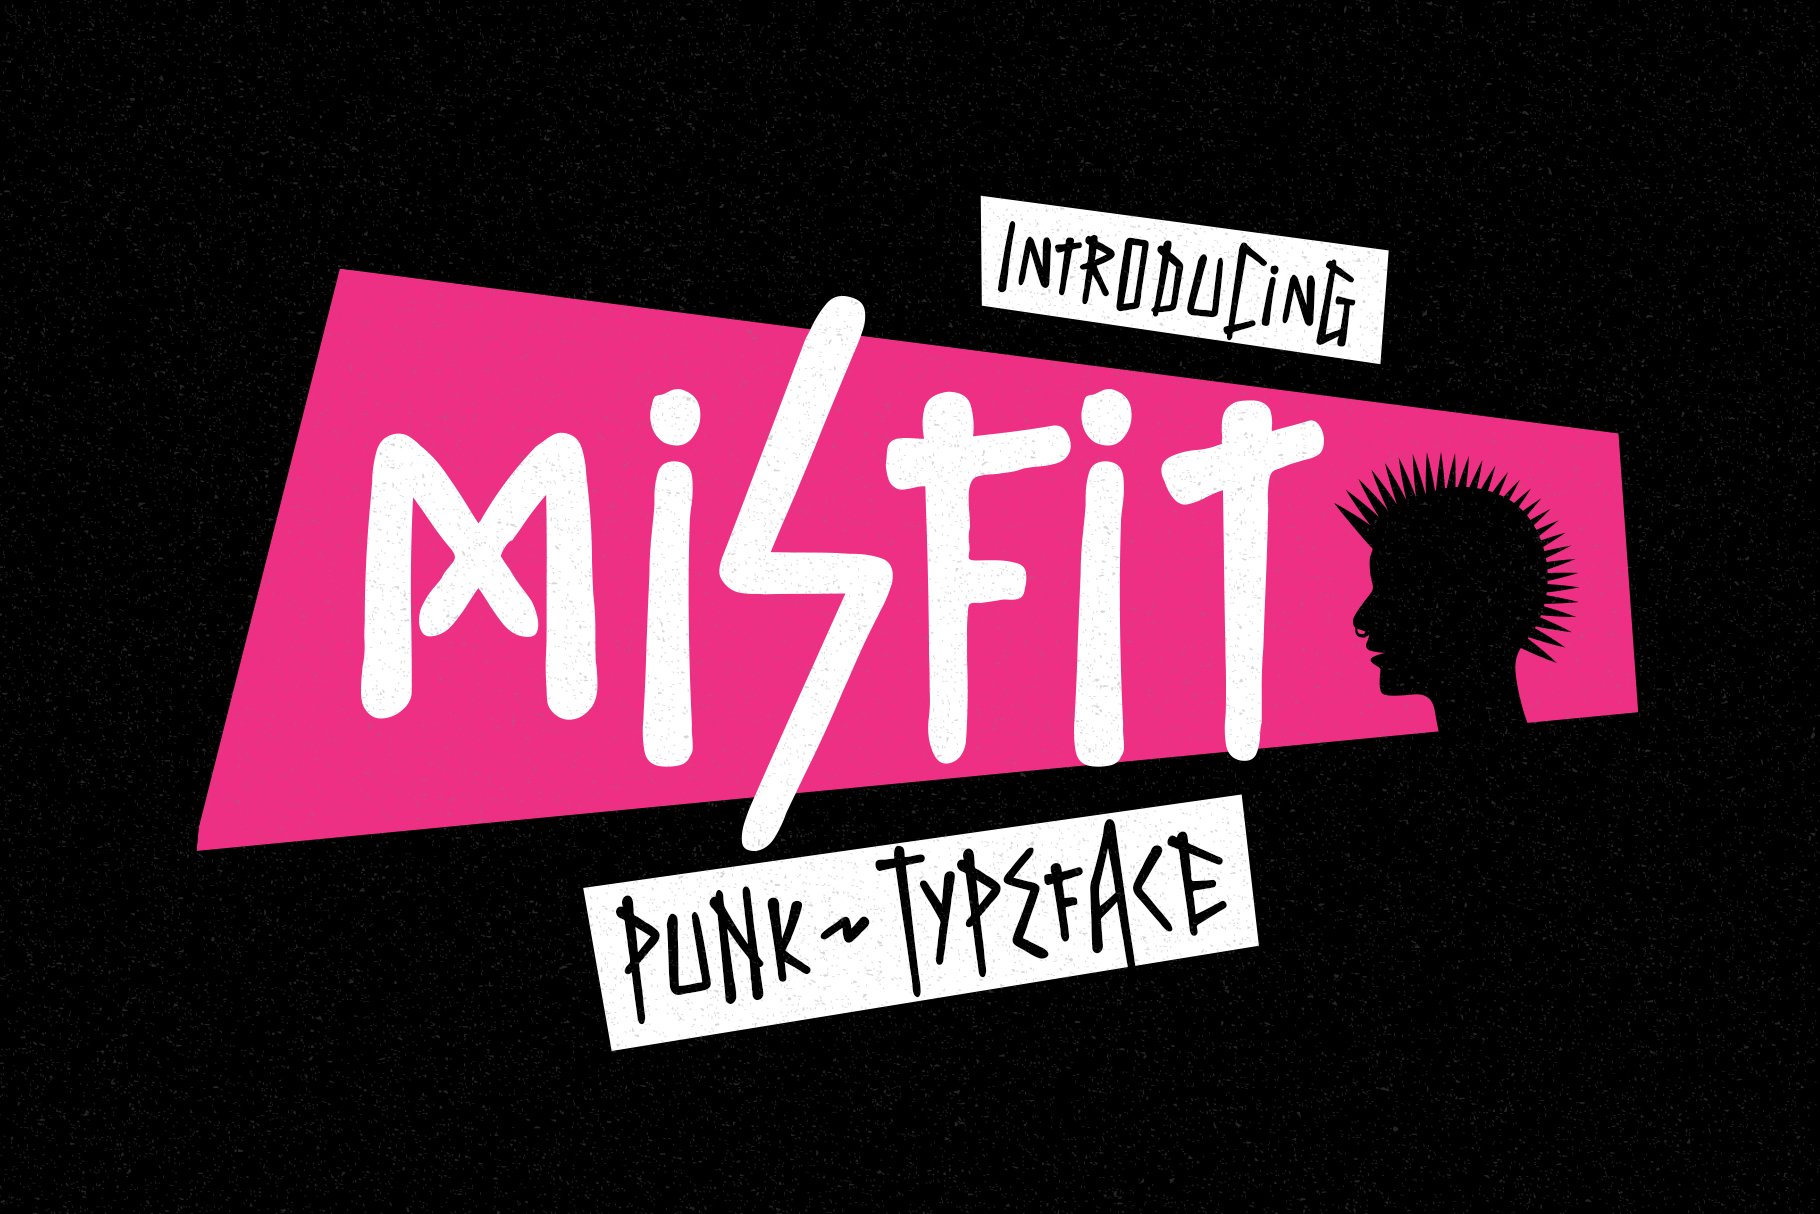 Misfit - Punk Typeface cover image.